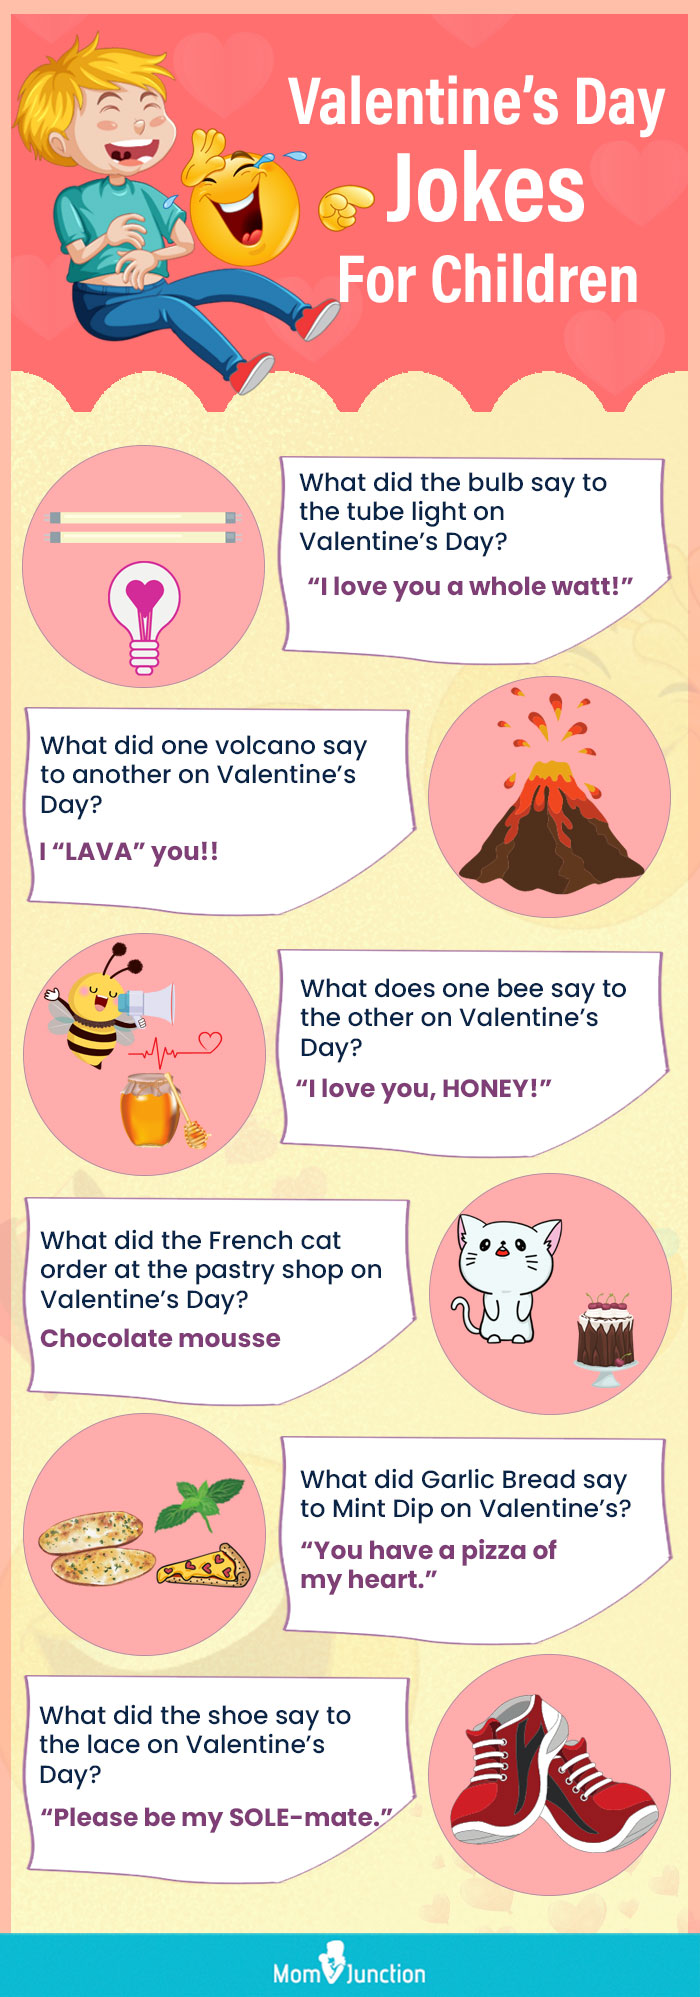 valentine s day jokes for children (infographic)